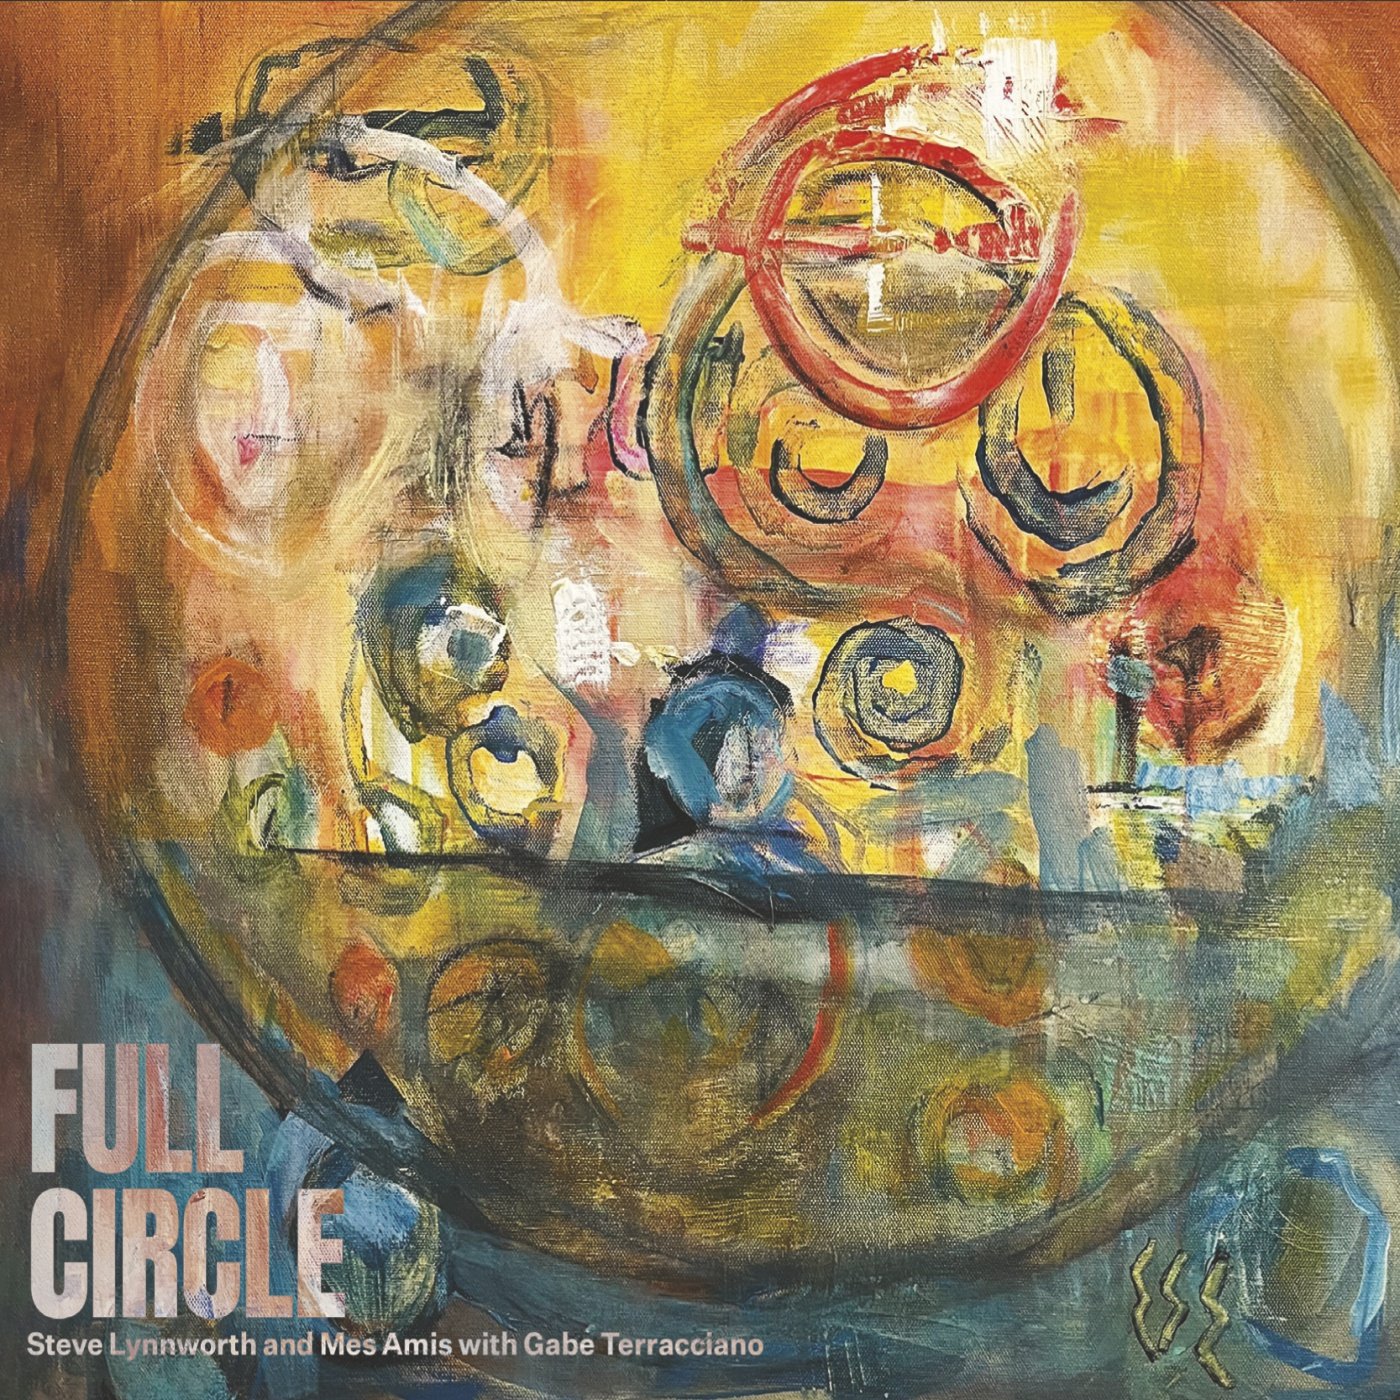 Full Circle - Steve Lynnworth